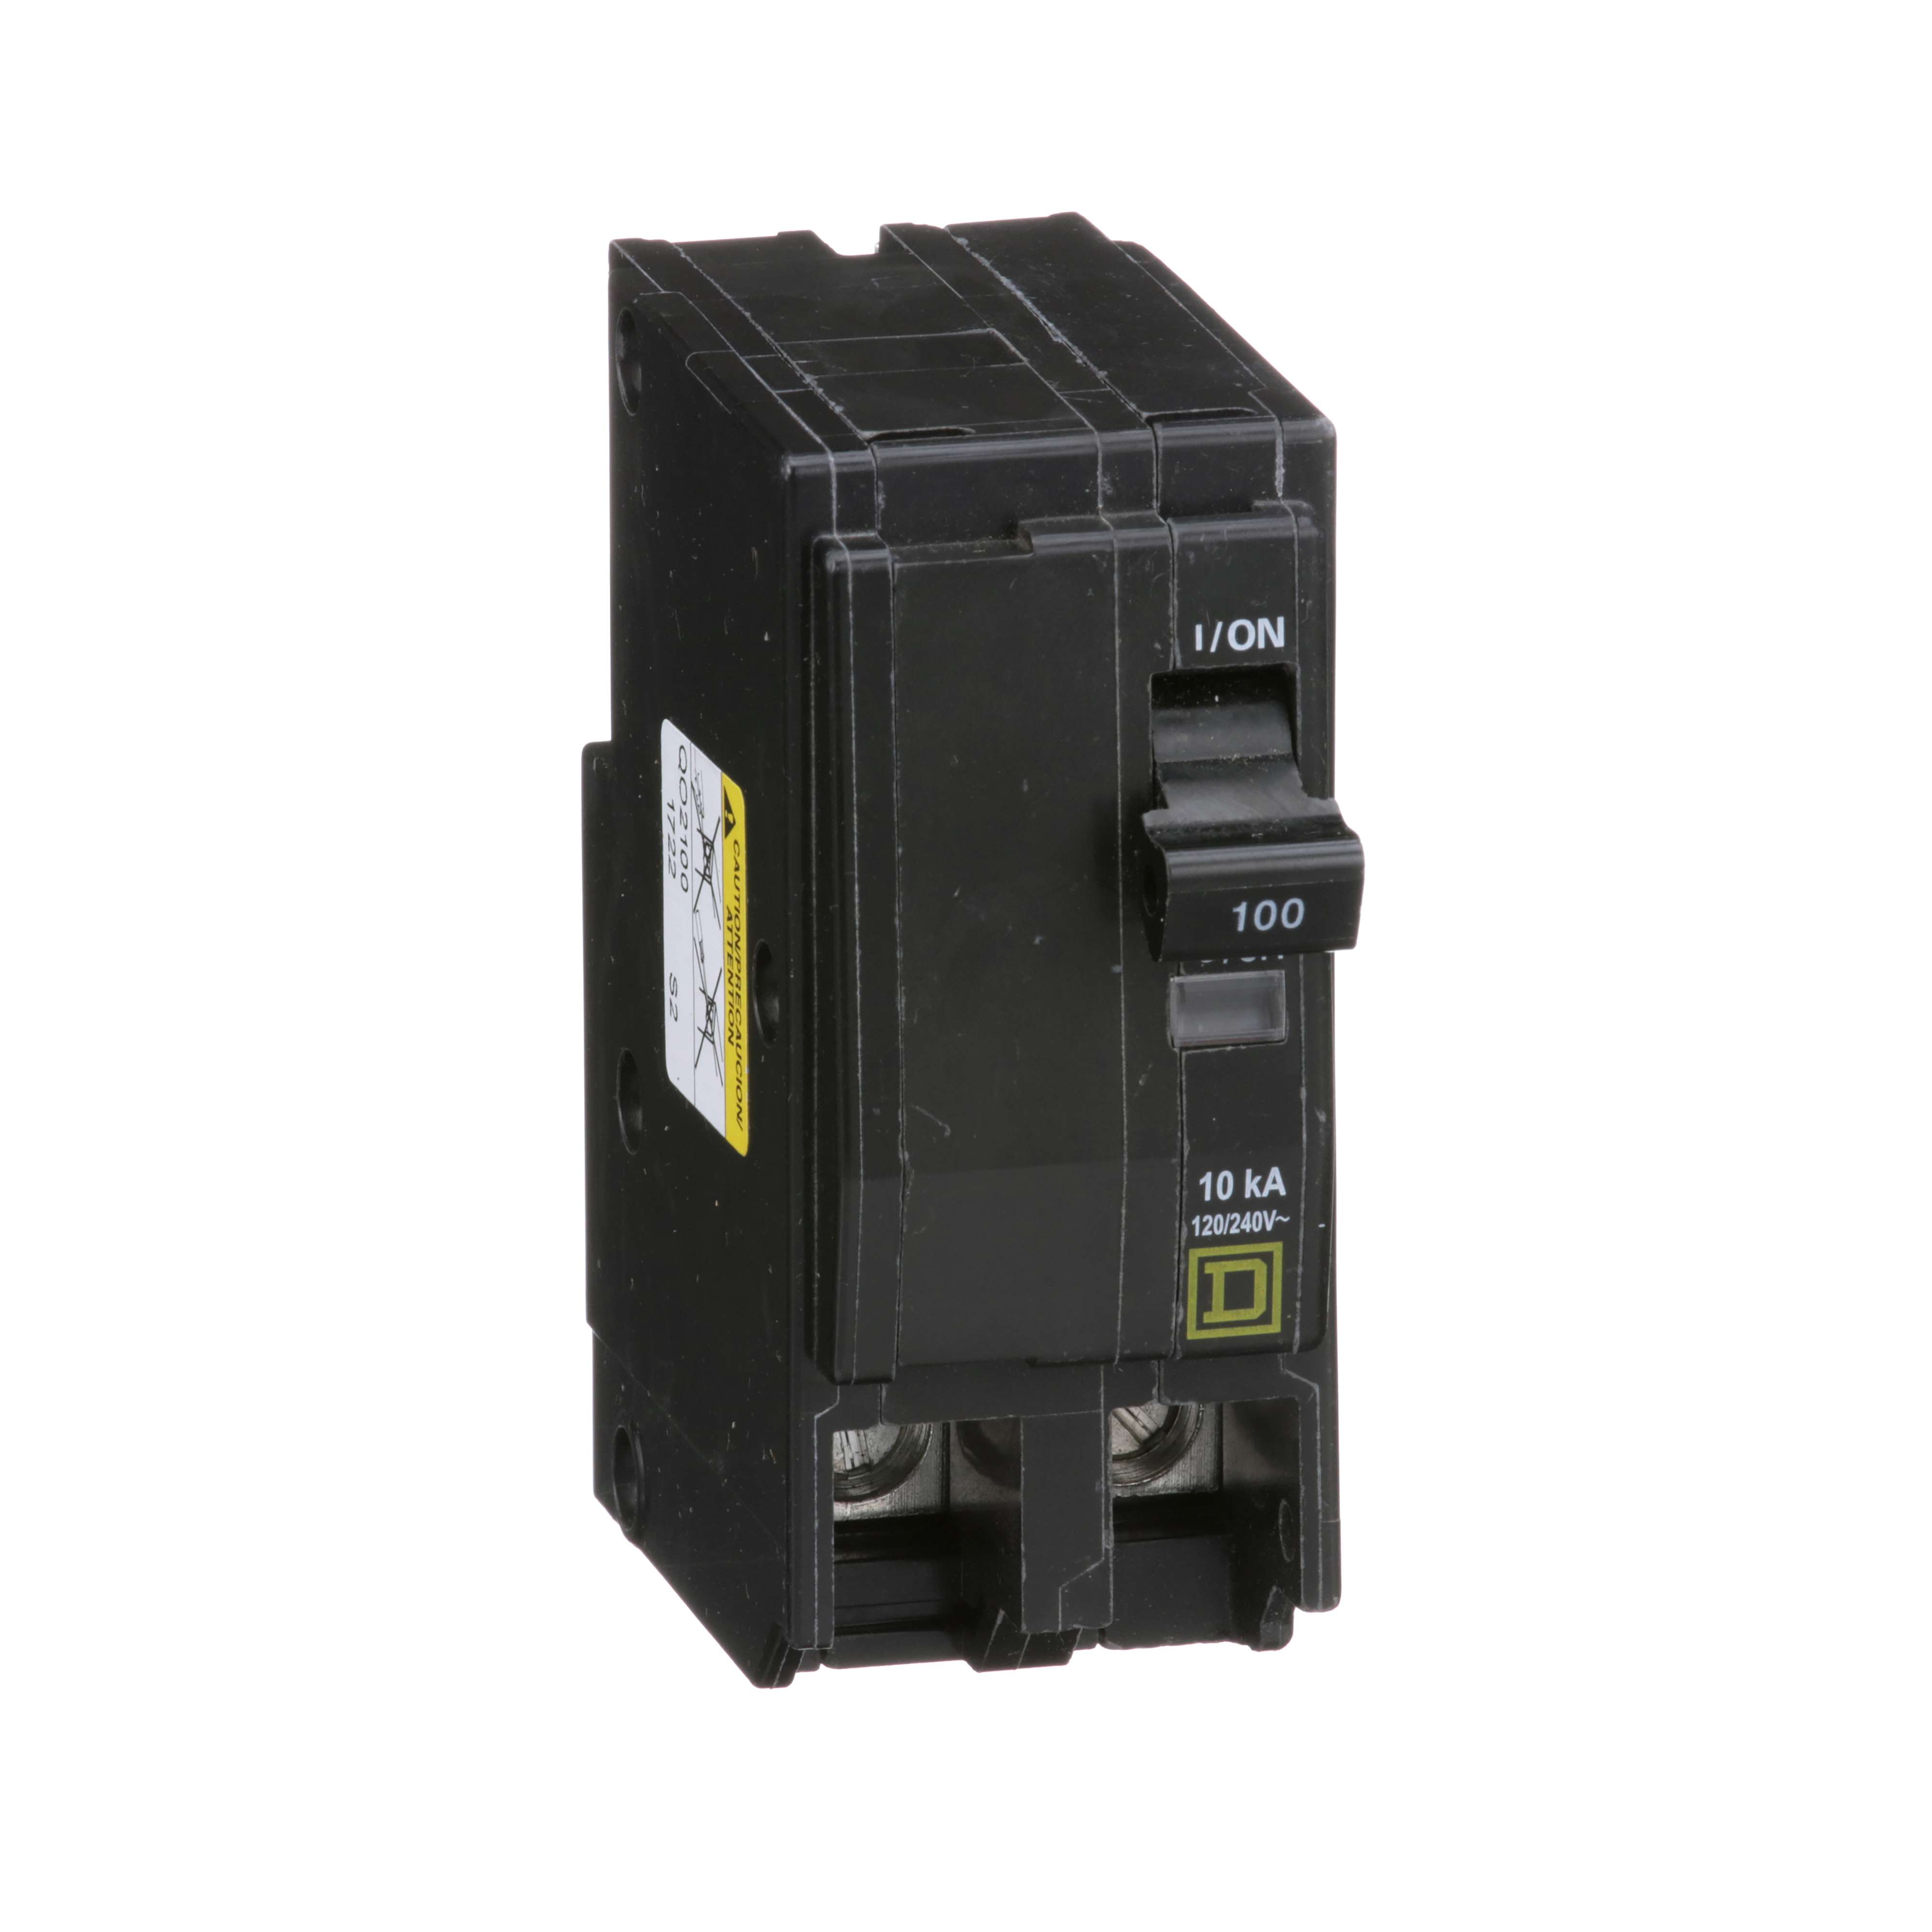 Mini circuit breaker, QO, 100A, 2 pole, 120/240VAC, 10kA, plug in